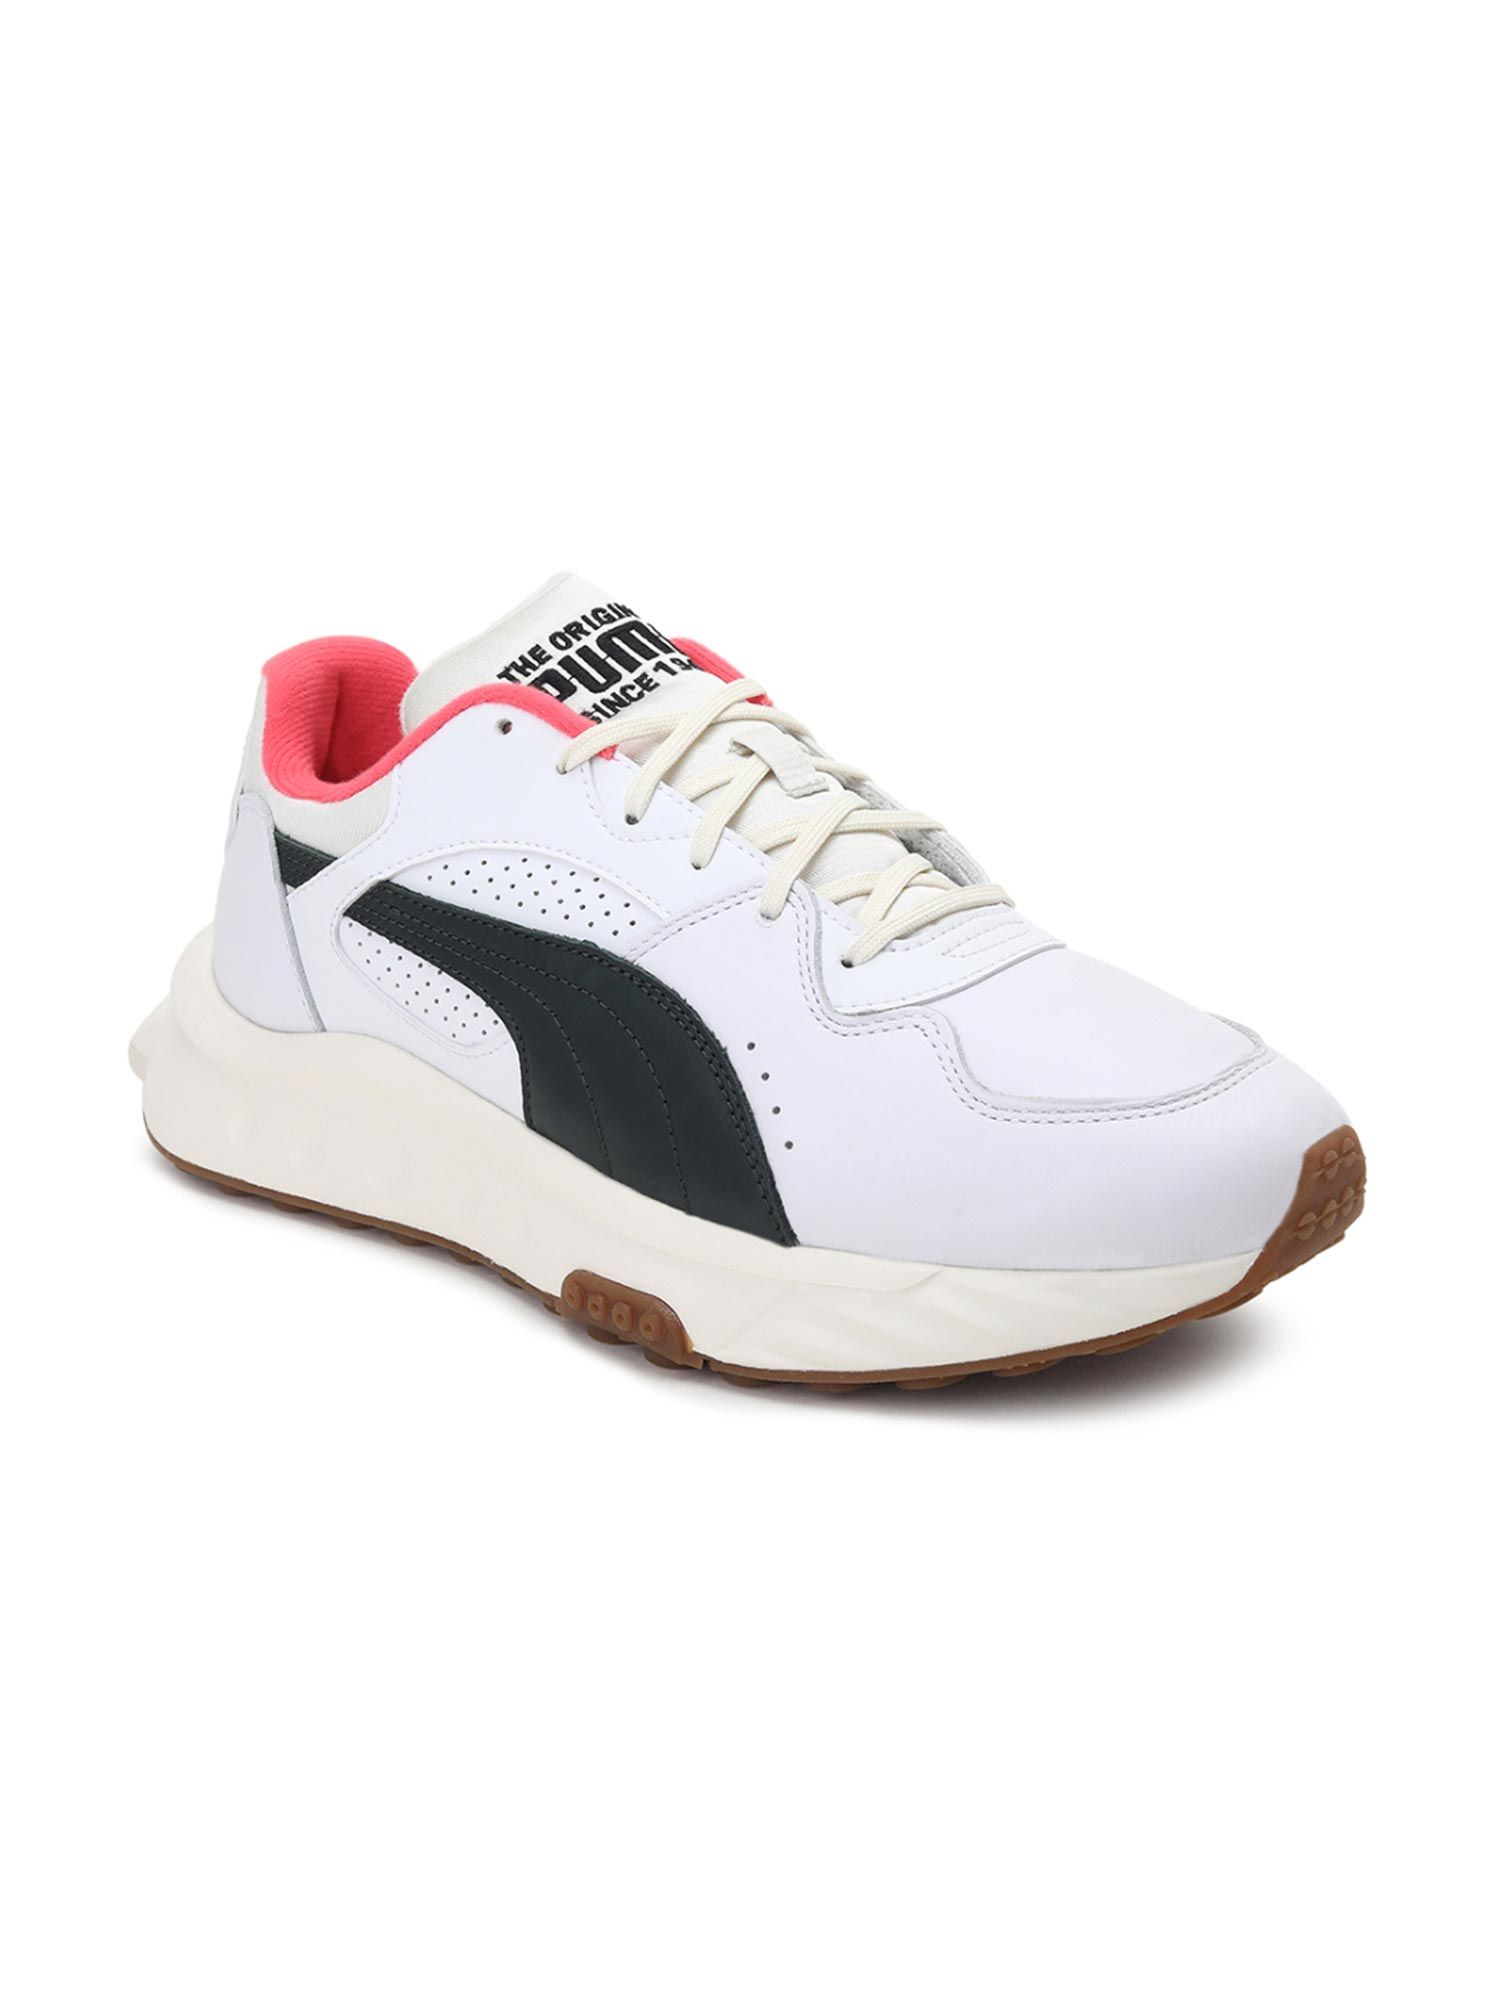 Puma Wild Rider PxP Unisex White Sneakers (UK 8)